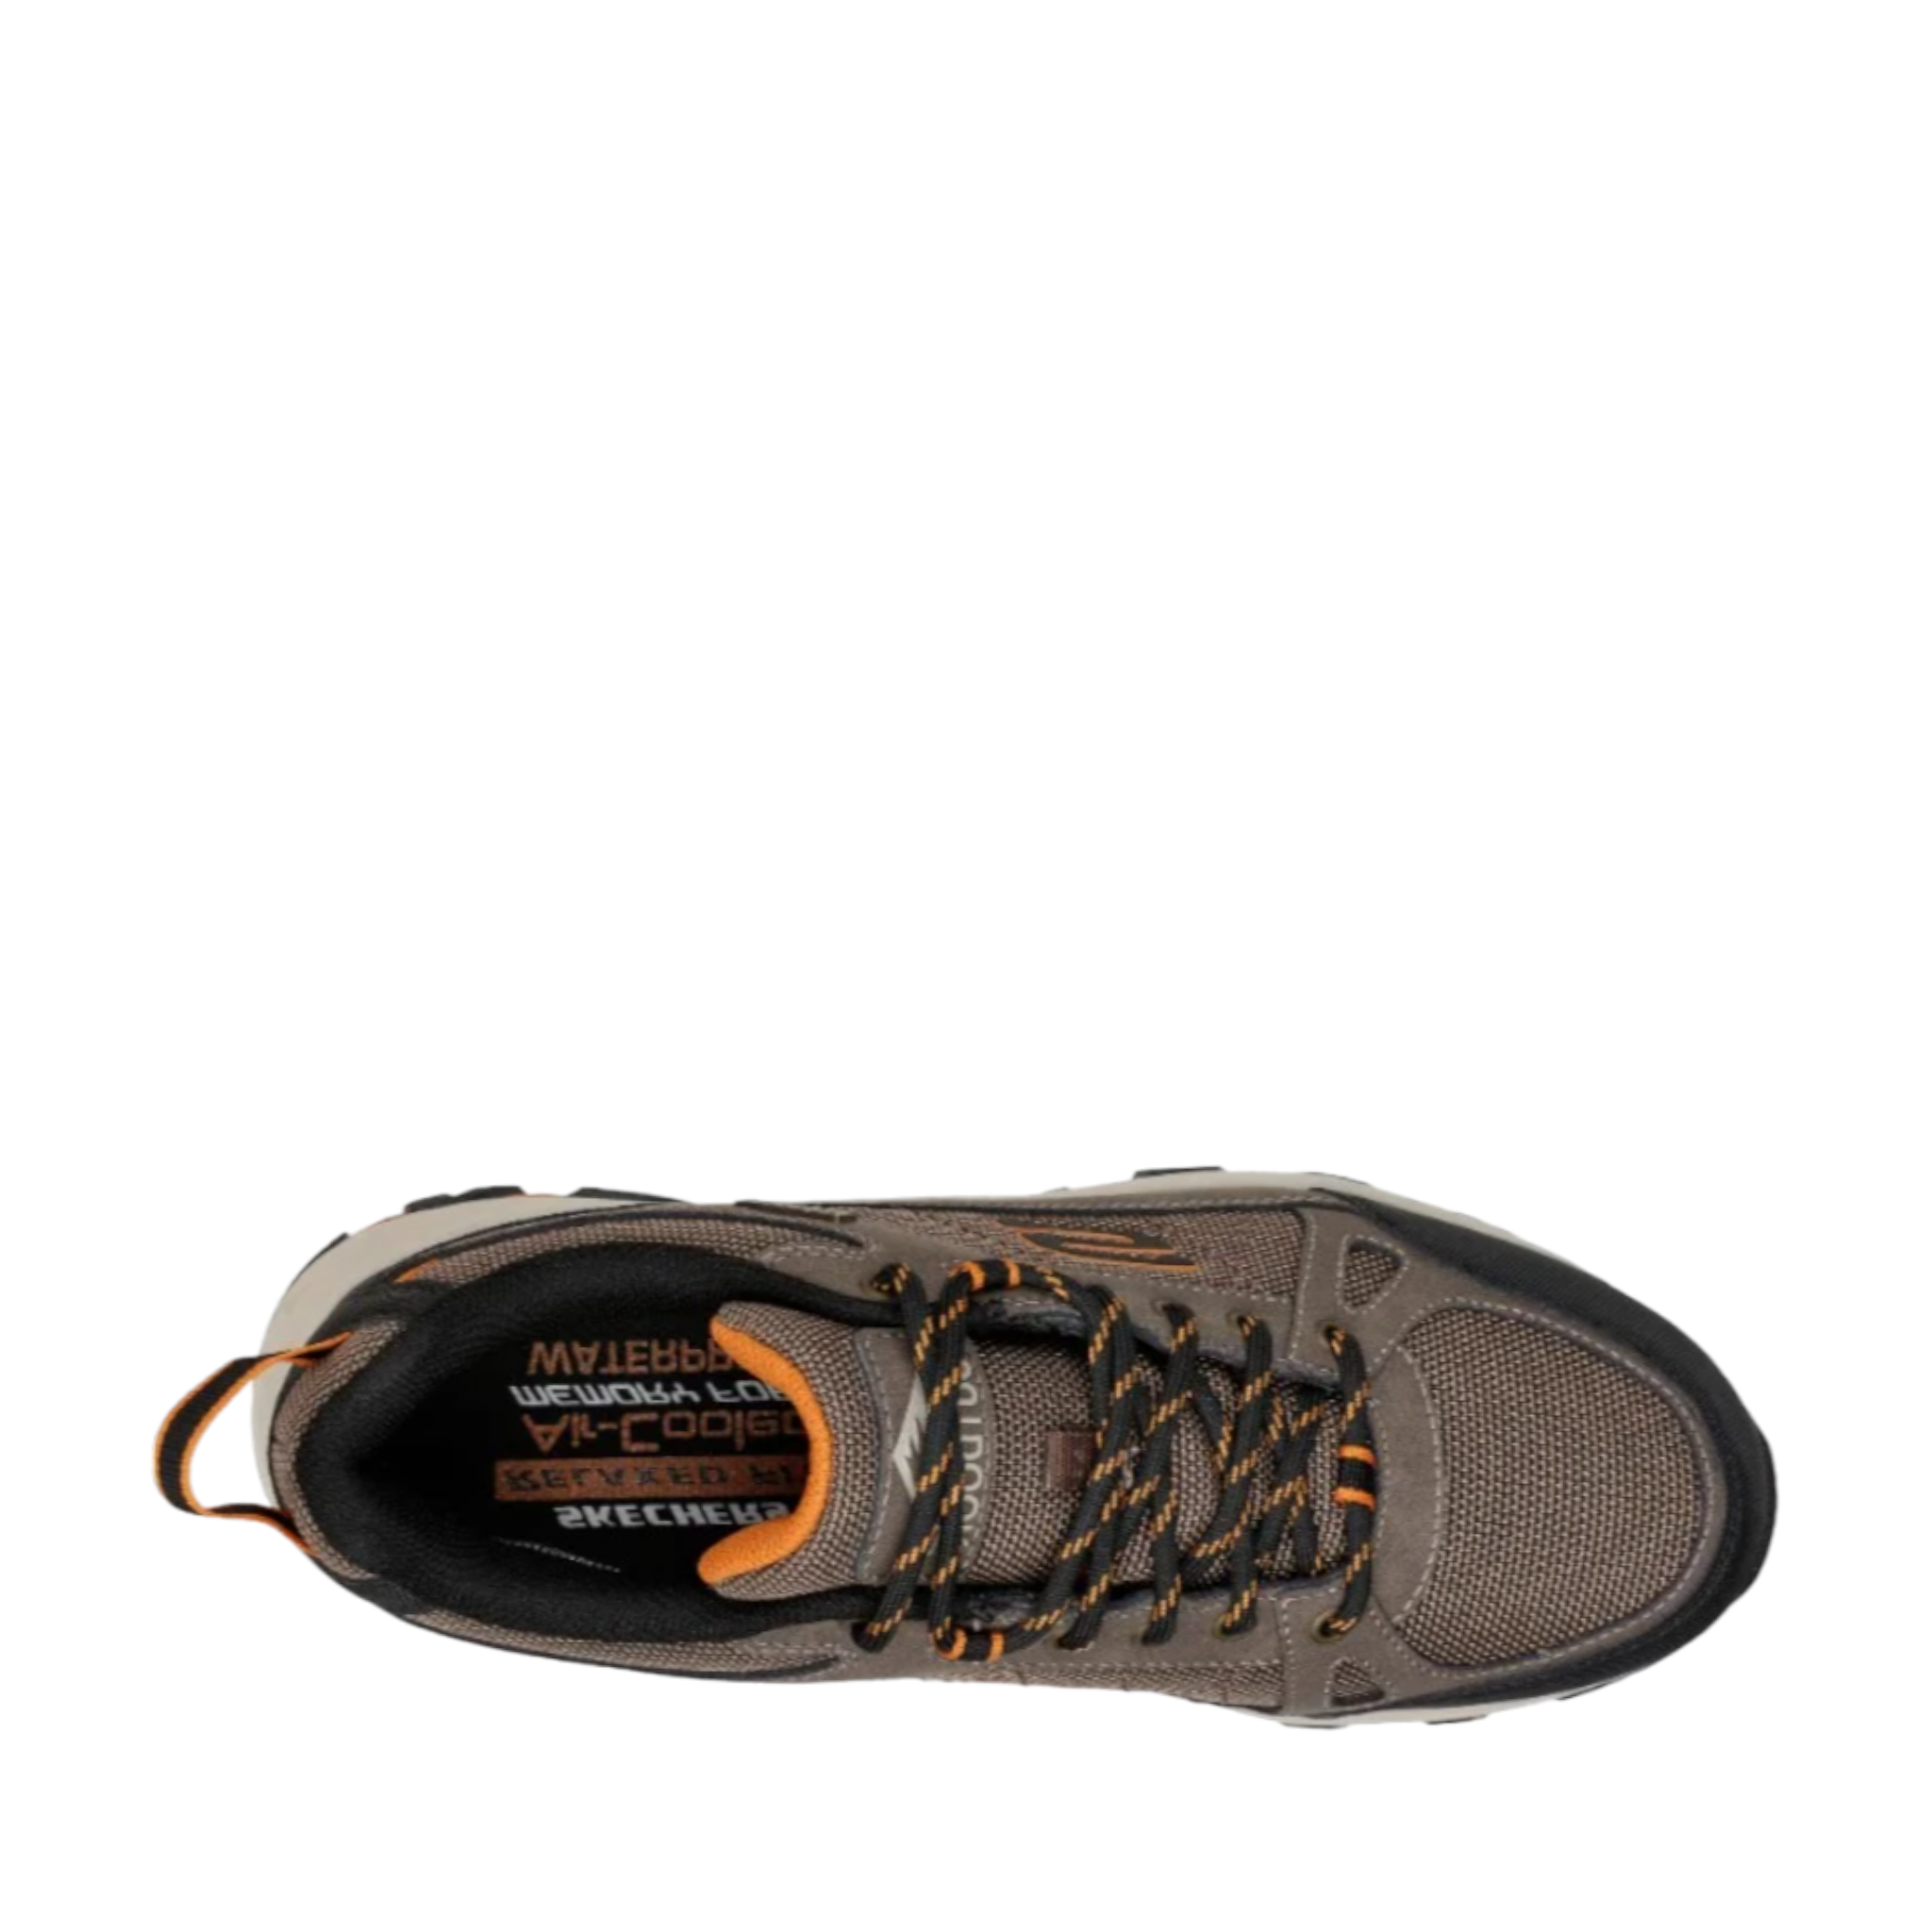 Cormack - shoe&amp;me - Skechers - Shoes - Mens, Sneakers